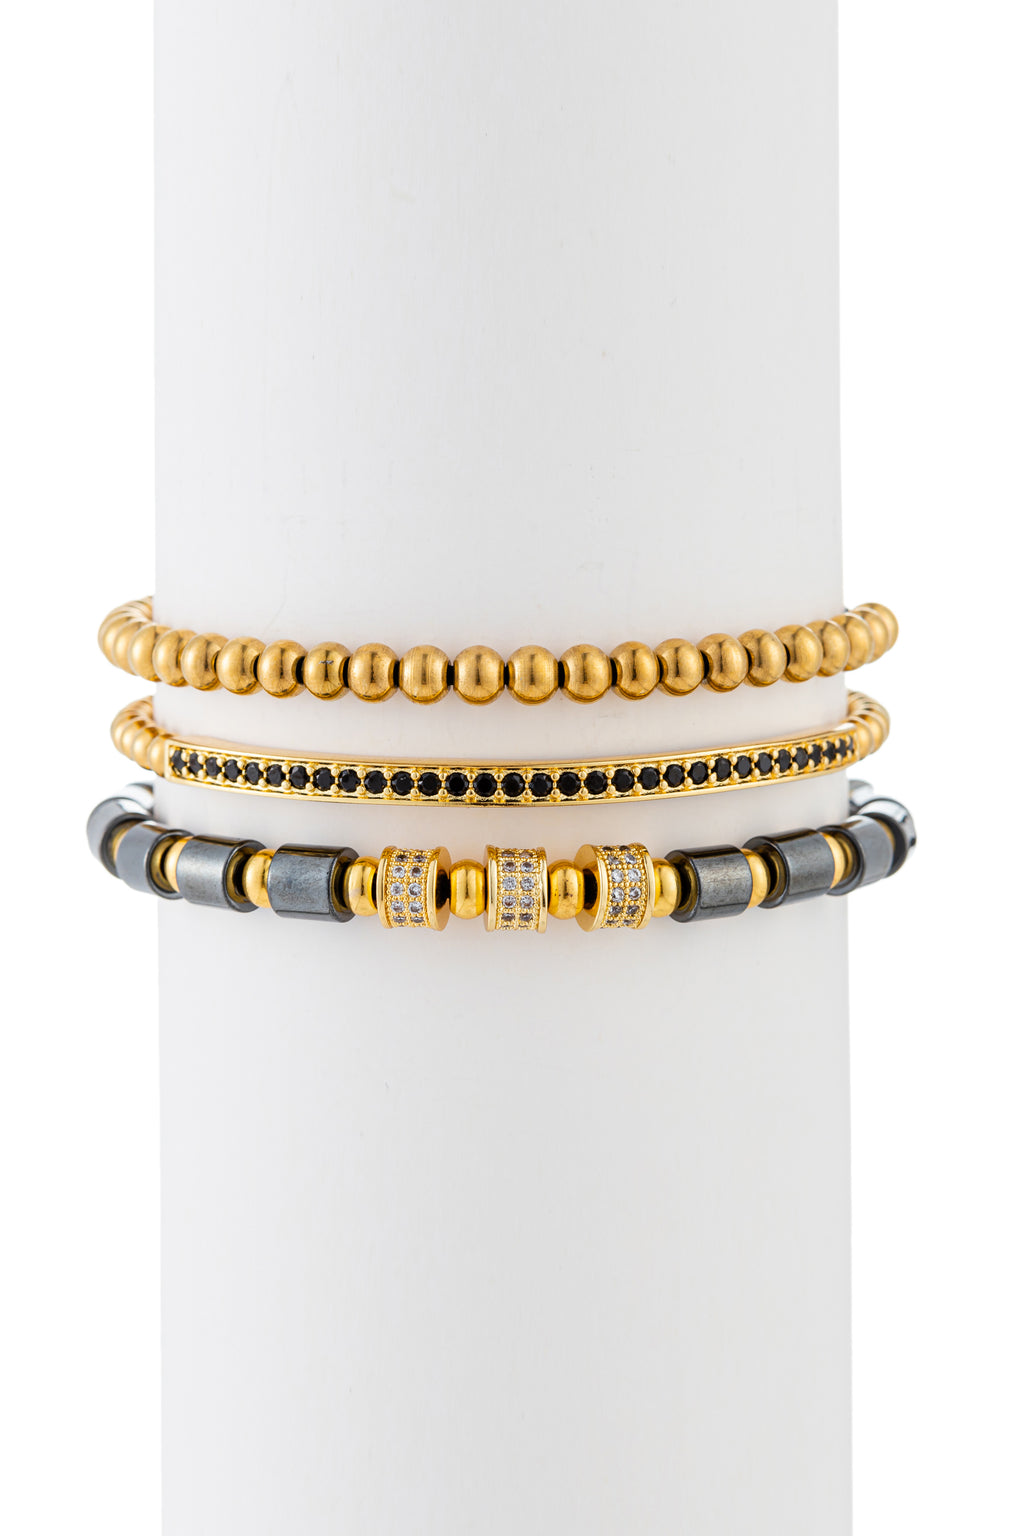 Gold titanium beaded bracelet set with lapis and brass CZ.